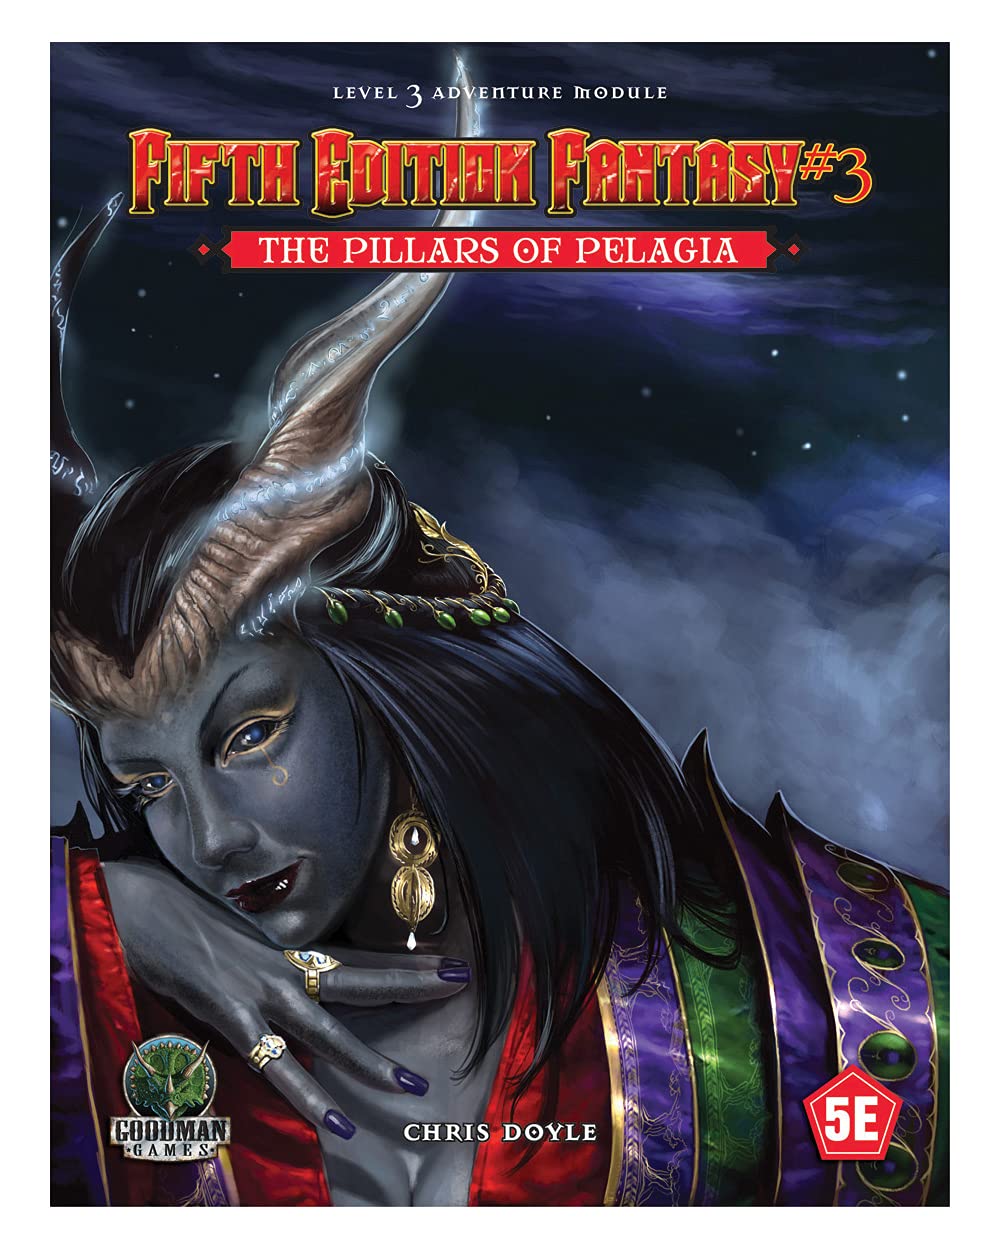 The Pillars of Pelagia - Fifth Edition Fantasy Adventure #3